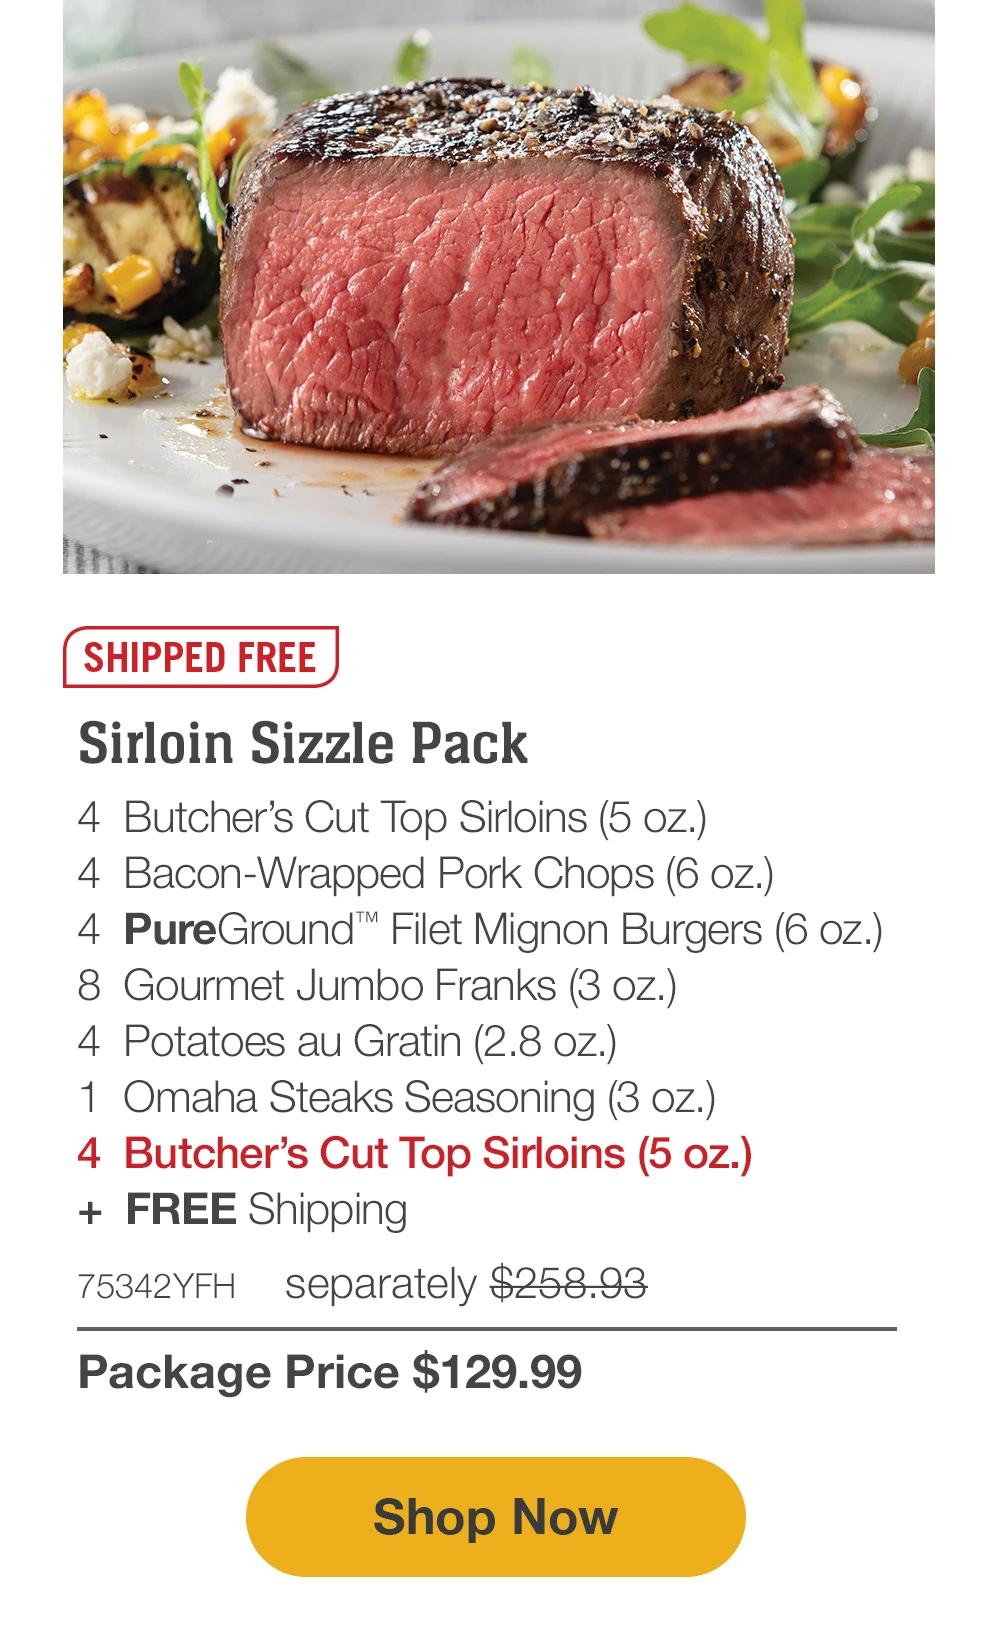 Ultimate Griller's Pack | 4  Bacon-Wrapped Filet Mignons (5 oz.)| 4  Boneless Pork Chops (6 oz.)| 4  PureGround Filet Mignon Burgers (6 oz.) | 4  Gourmet Jumbo Franks (3 oz.)|4  Caramel Apple Tartlets (4 oz.)|1  Omaha Steaks Seasoning (3 oz.)| 4  FREE Butcher's Cut Top Sirloins (5 oz.)| 71946YFH separately $260.94 Package Price $129.99  || Shop Now